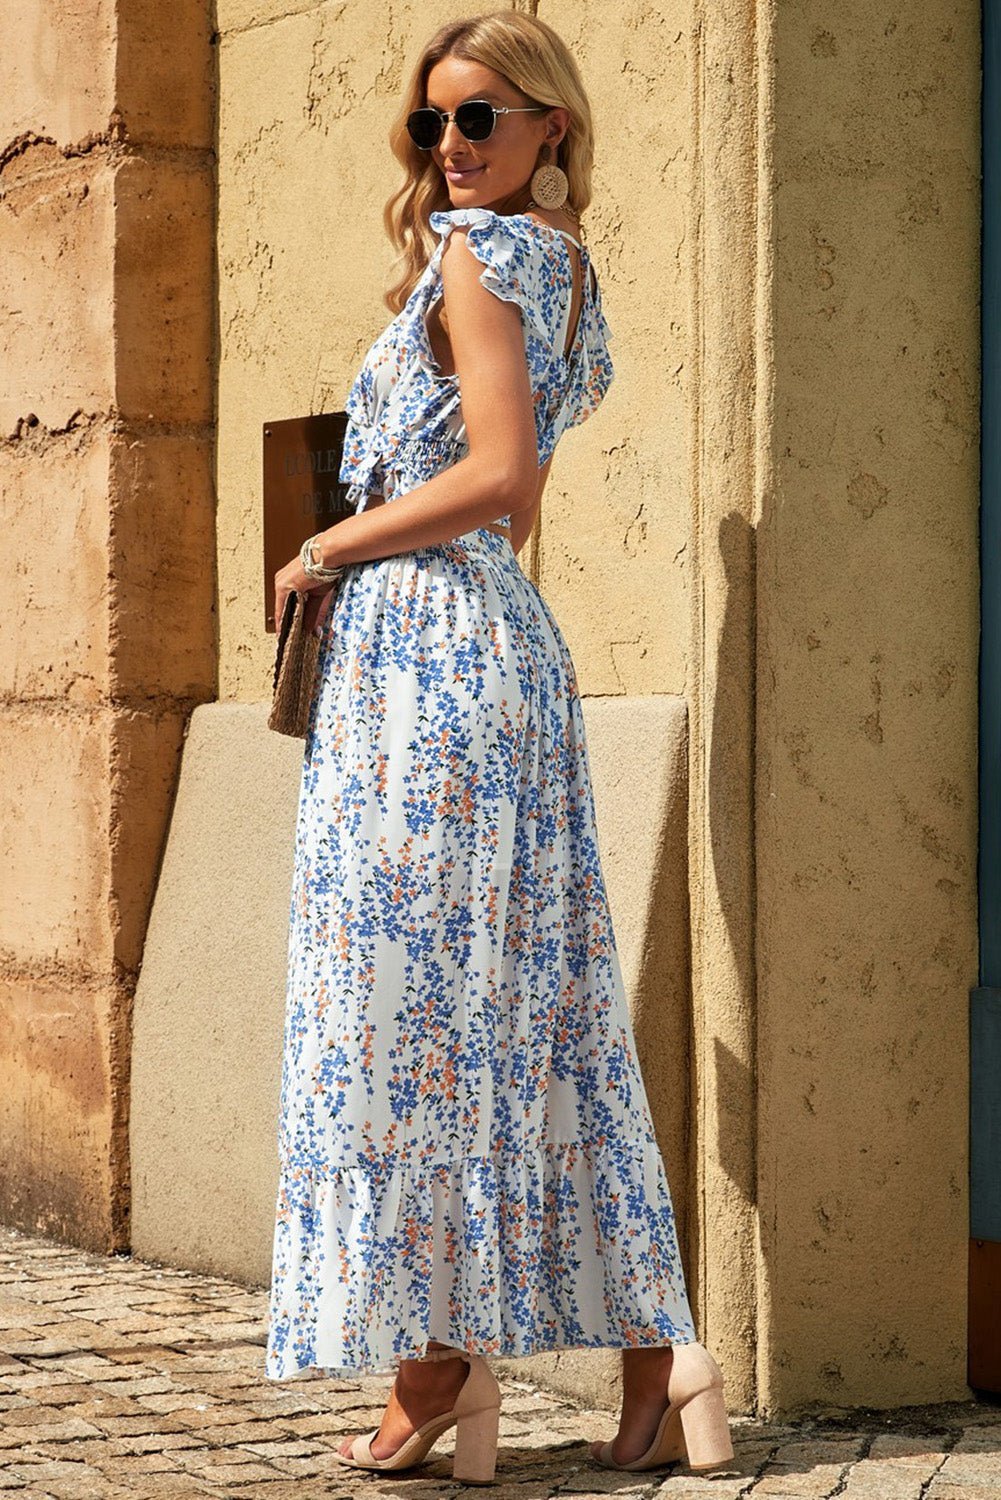 Fashionsarah.com Floral Ruffled Crop Top and Maxi Skirt Sets